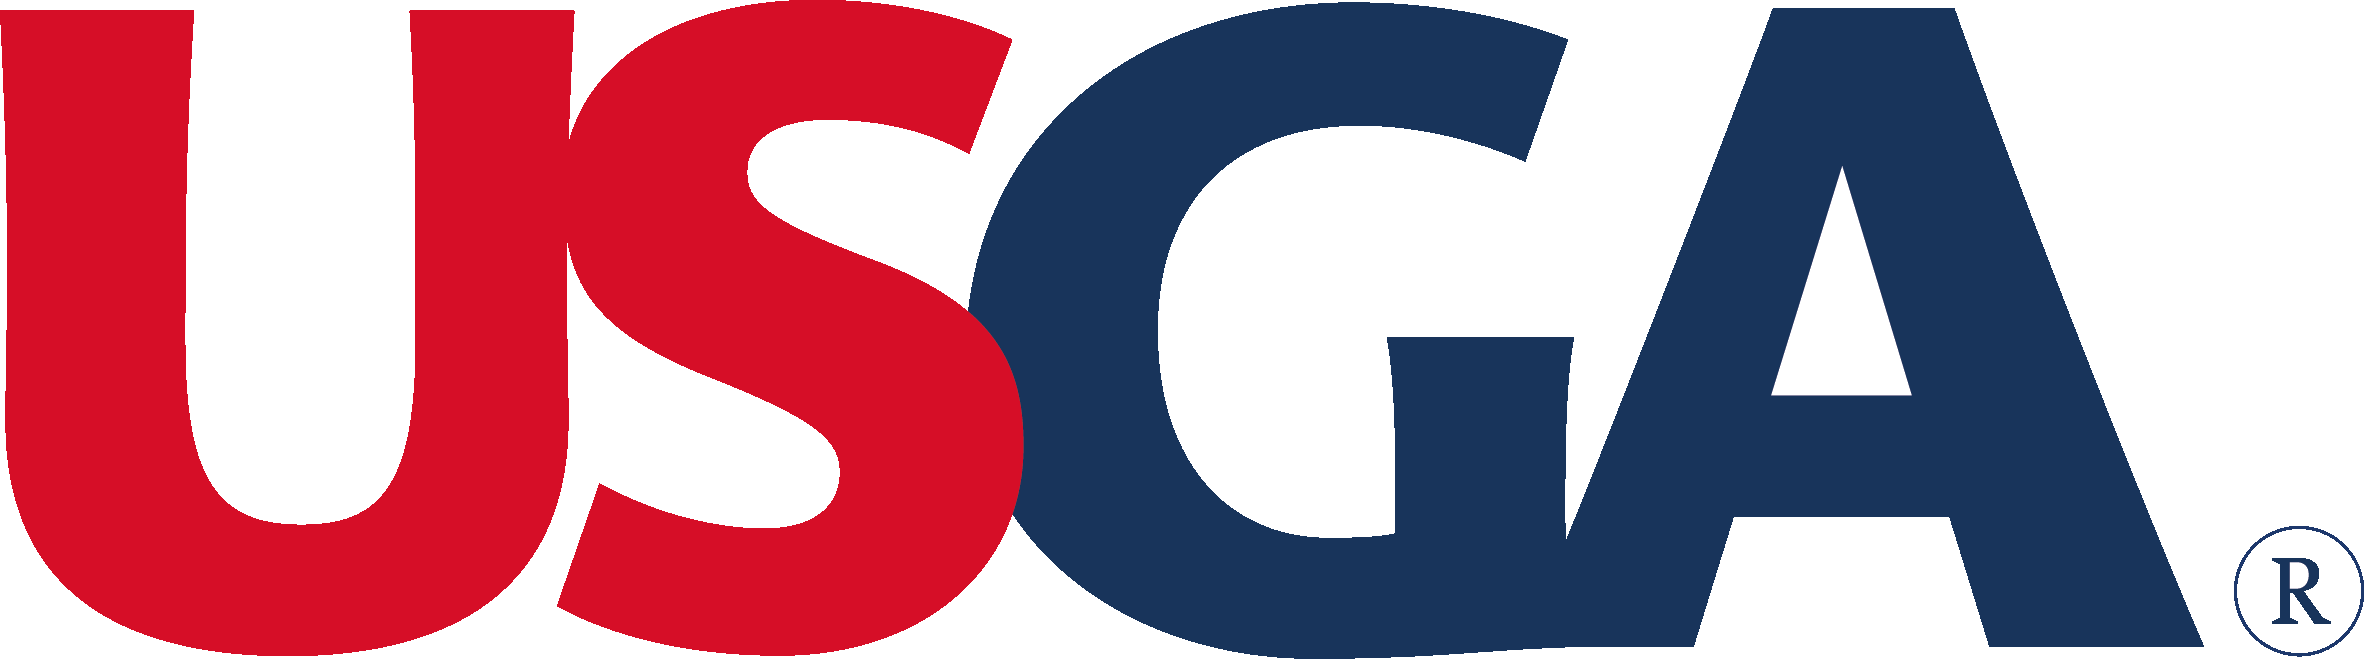 United States Golf Association Logo (USGA   usga.org) png